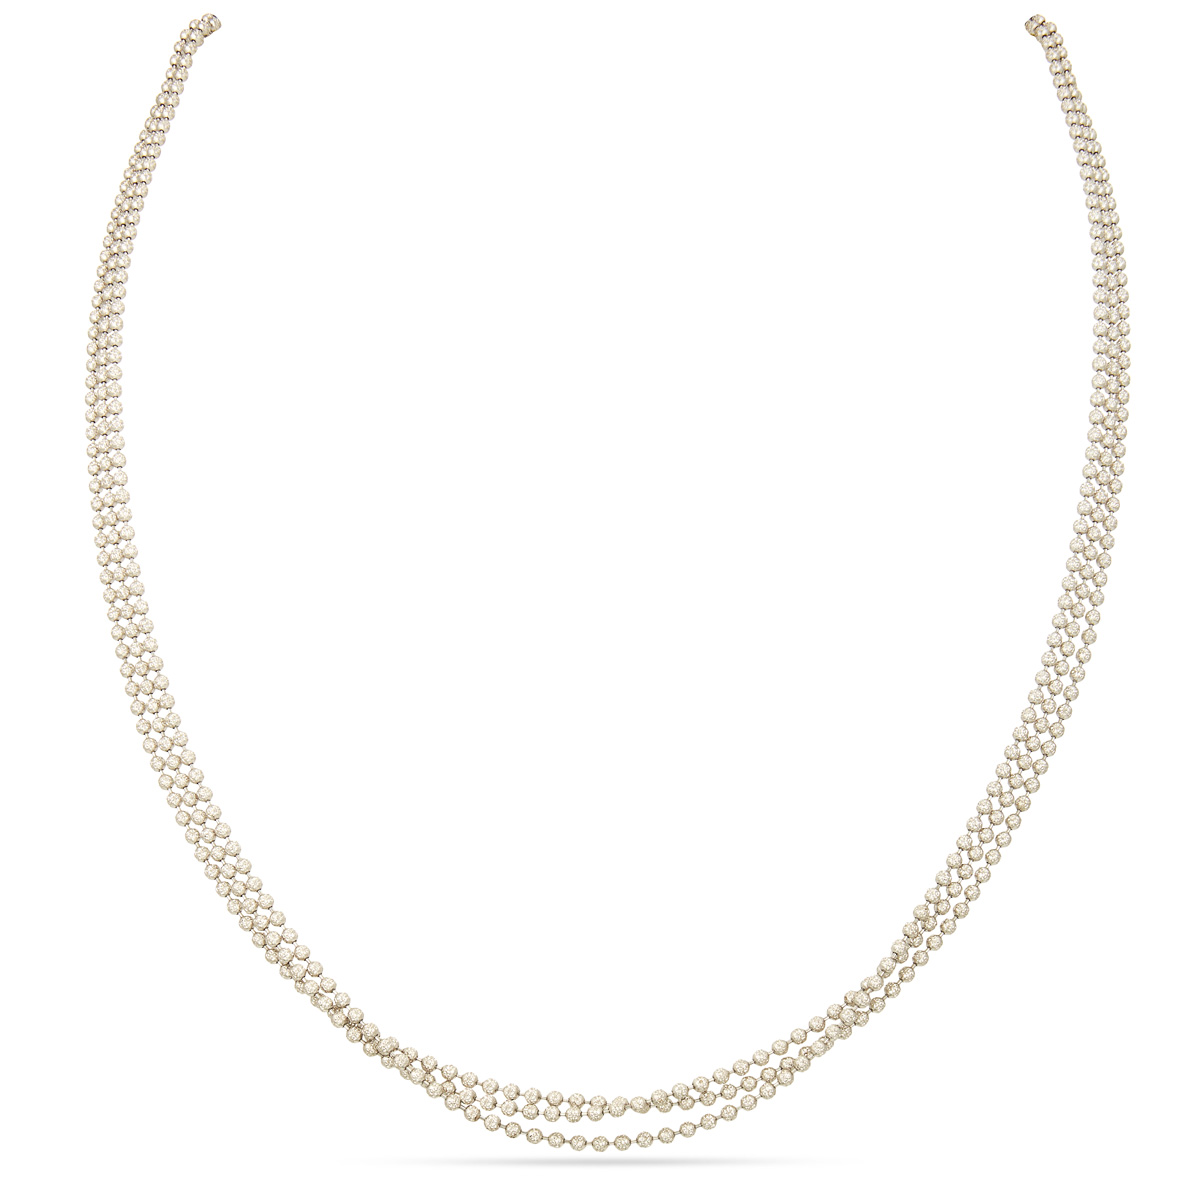 White Gold Beads Chain